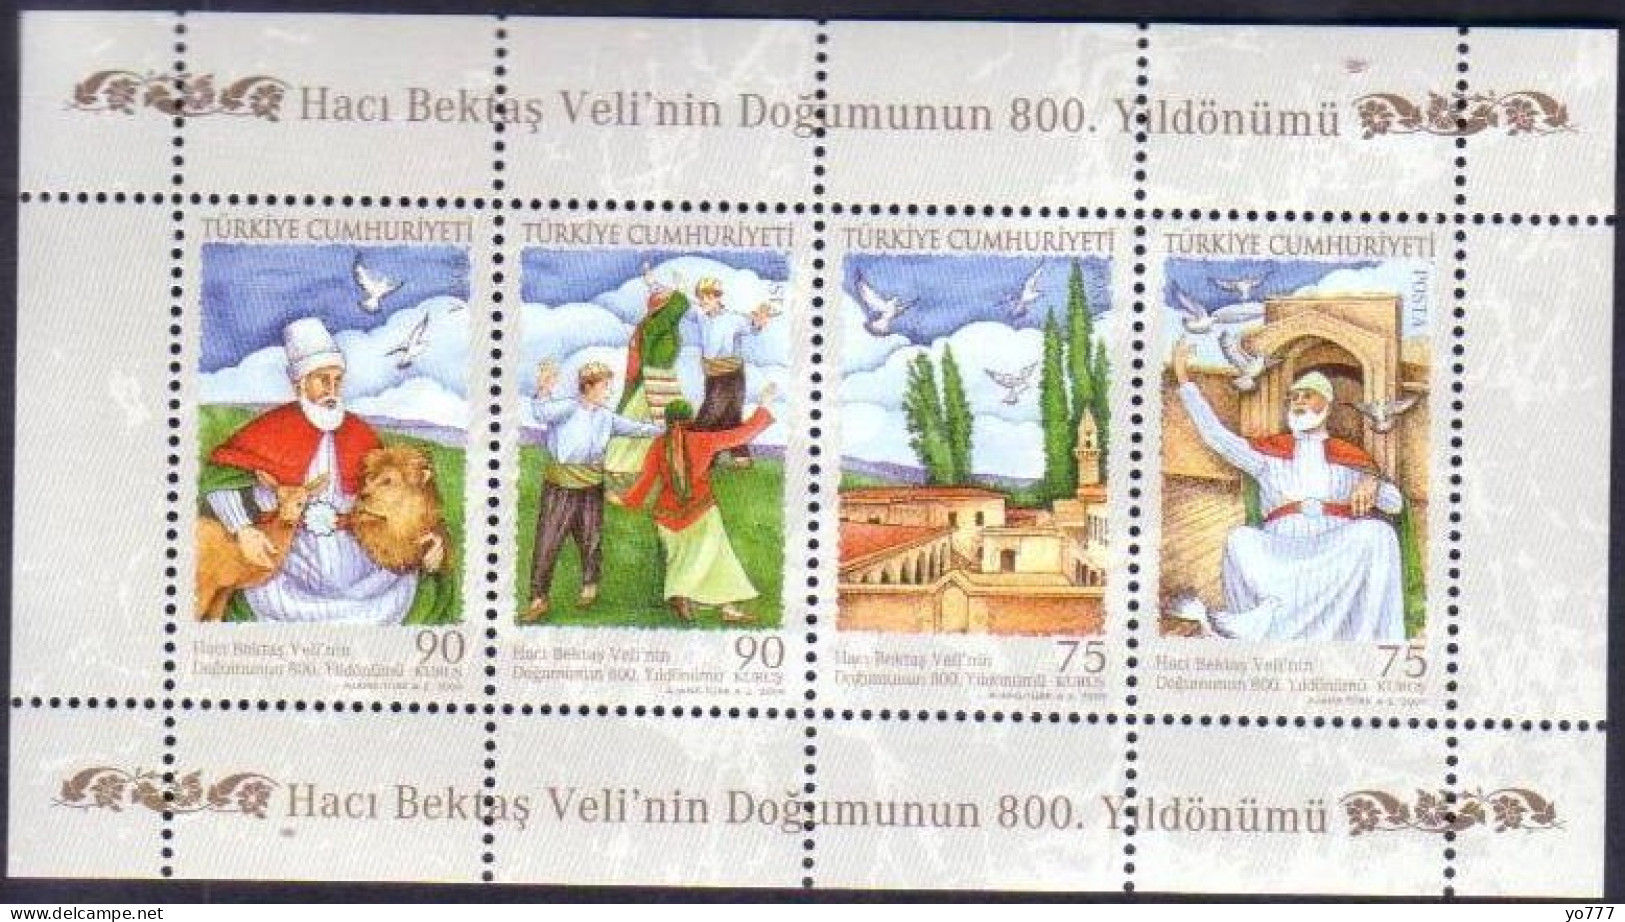 (3773-76) TURKEY 800th ANNIVERSARY OF THE BIRTH OF HACI BEKTAS VELI SOUVENIR SHEET MNH** - Ongebruikt